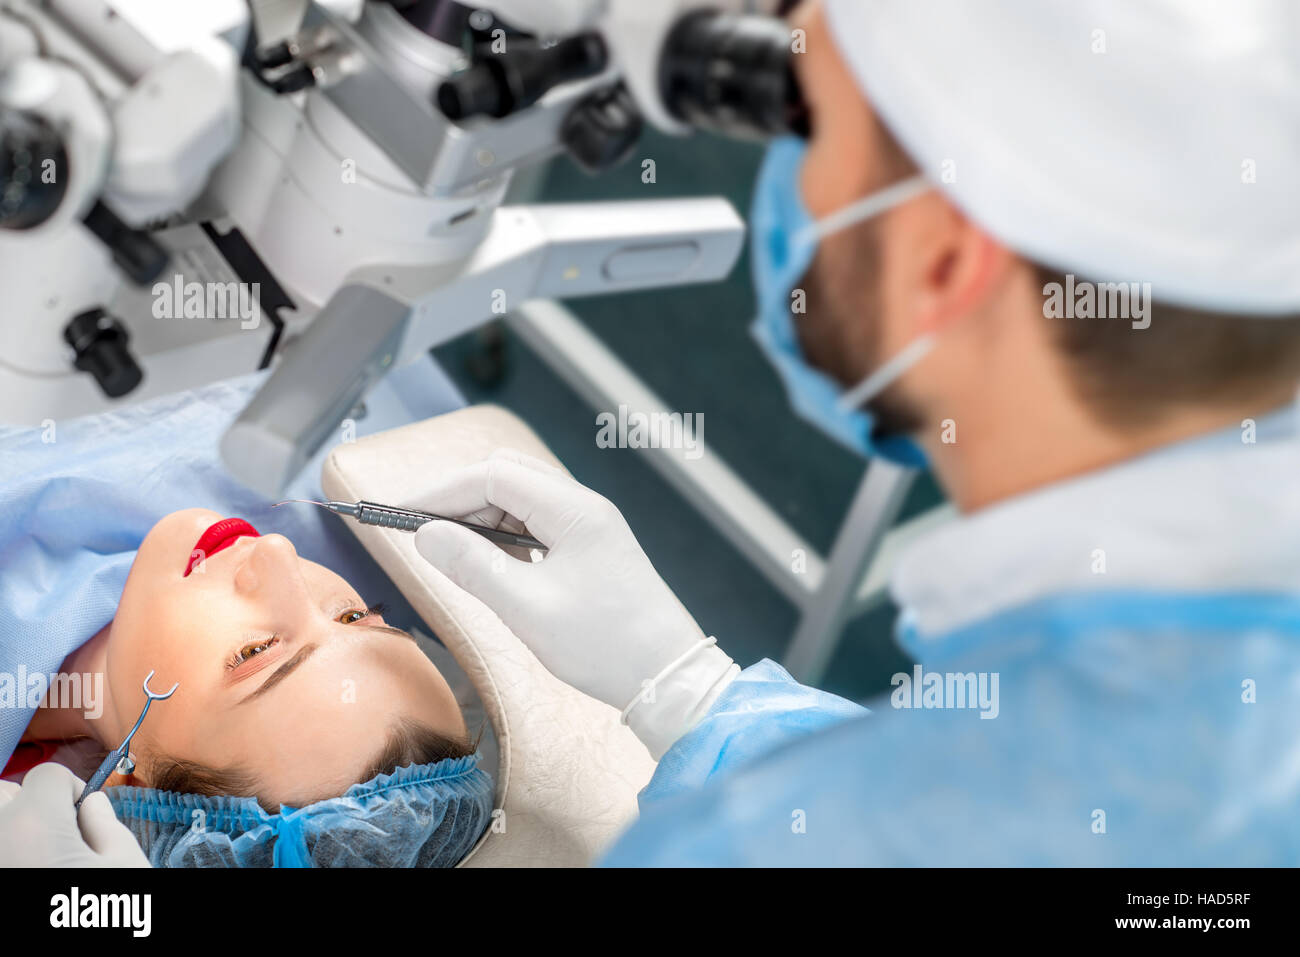 Eye surgical operation Stock Photo